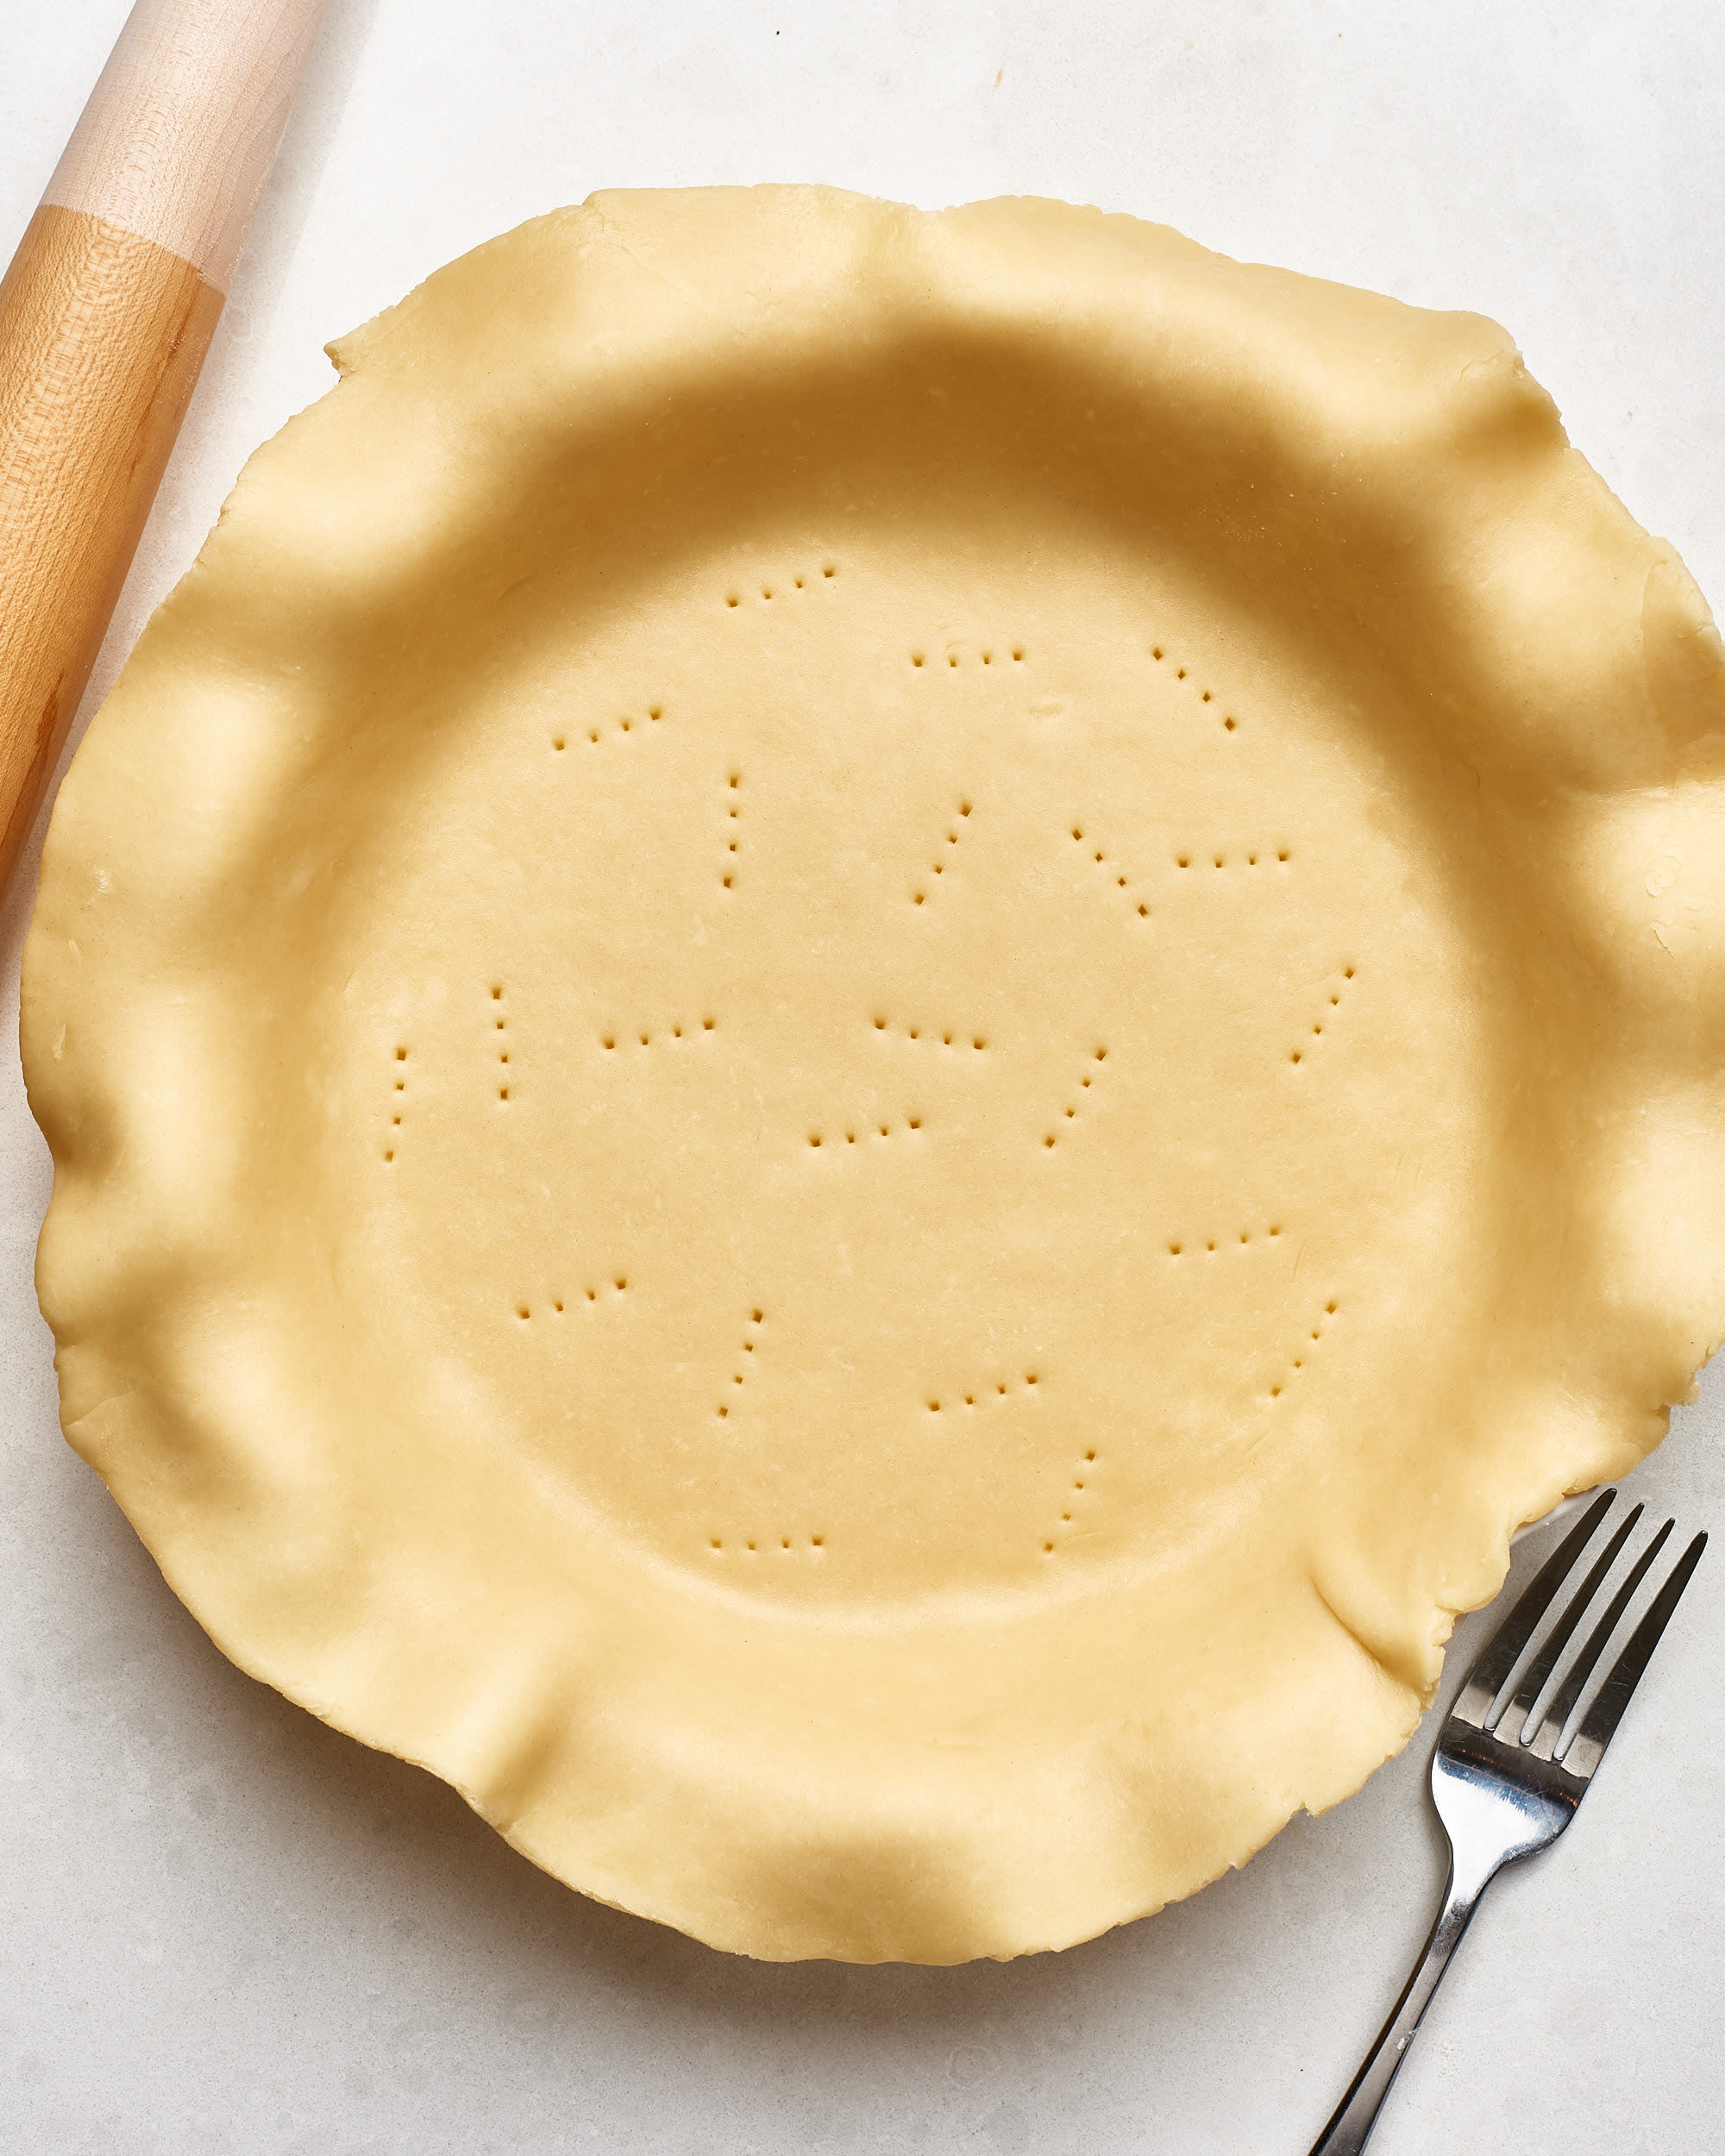 Lodge Stoneware NEW Ceramic Bakeware 9.5 1.36 Quart Pie Pan